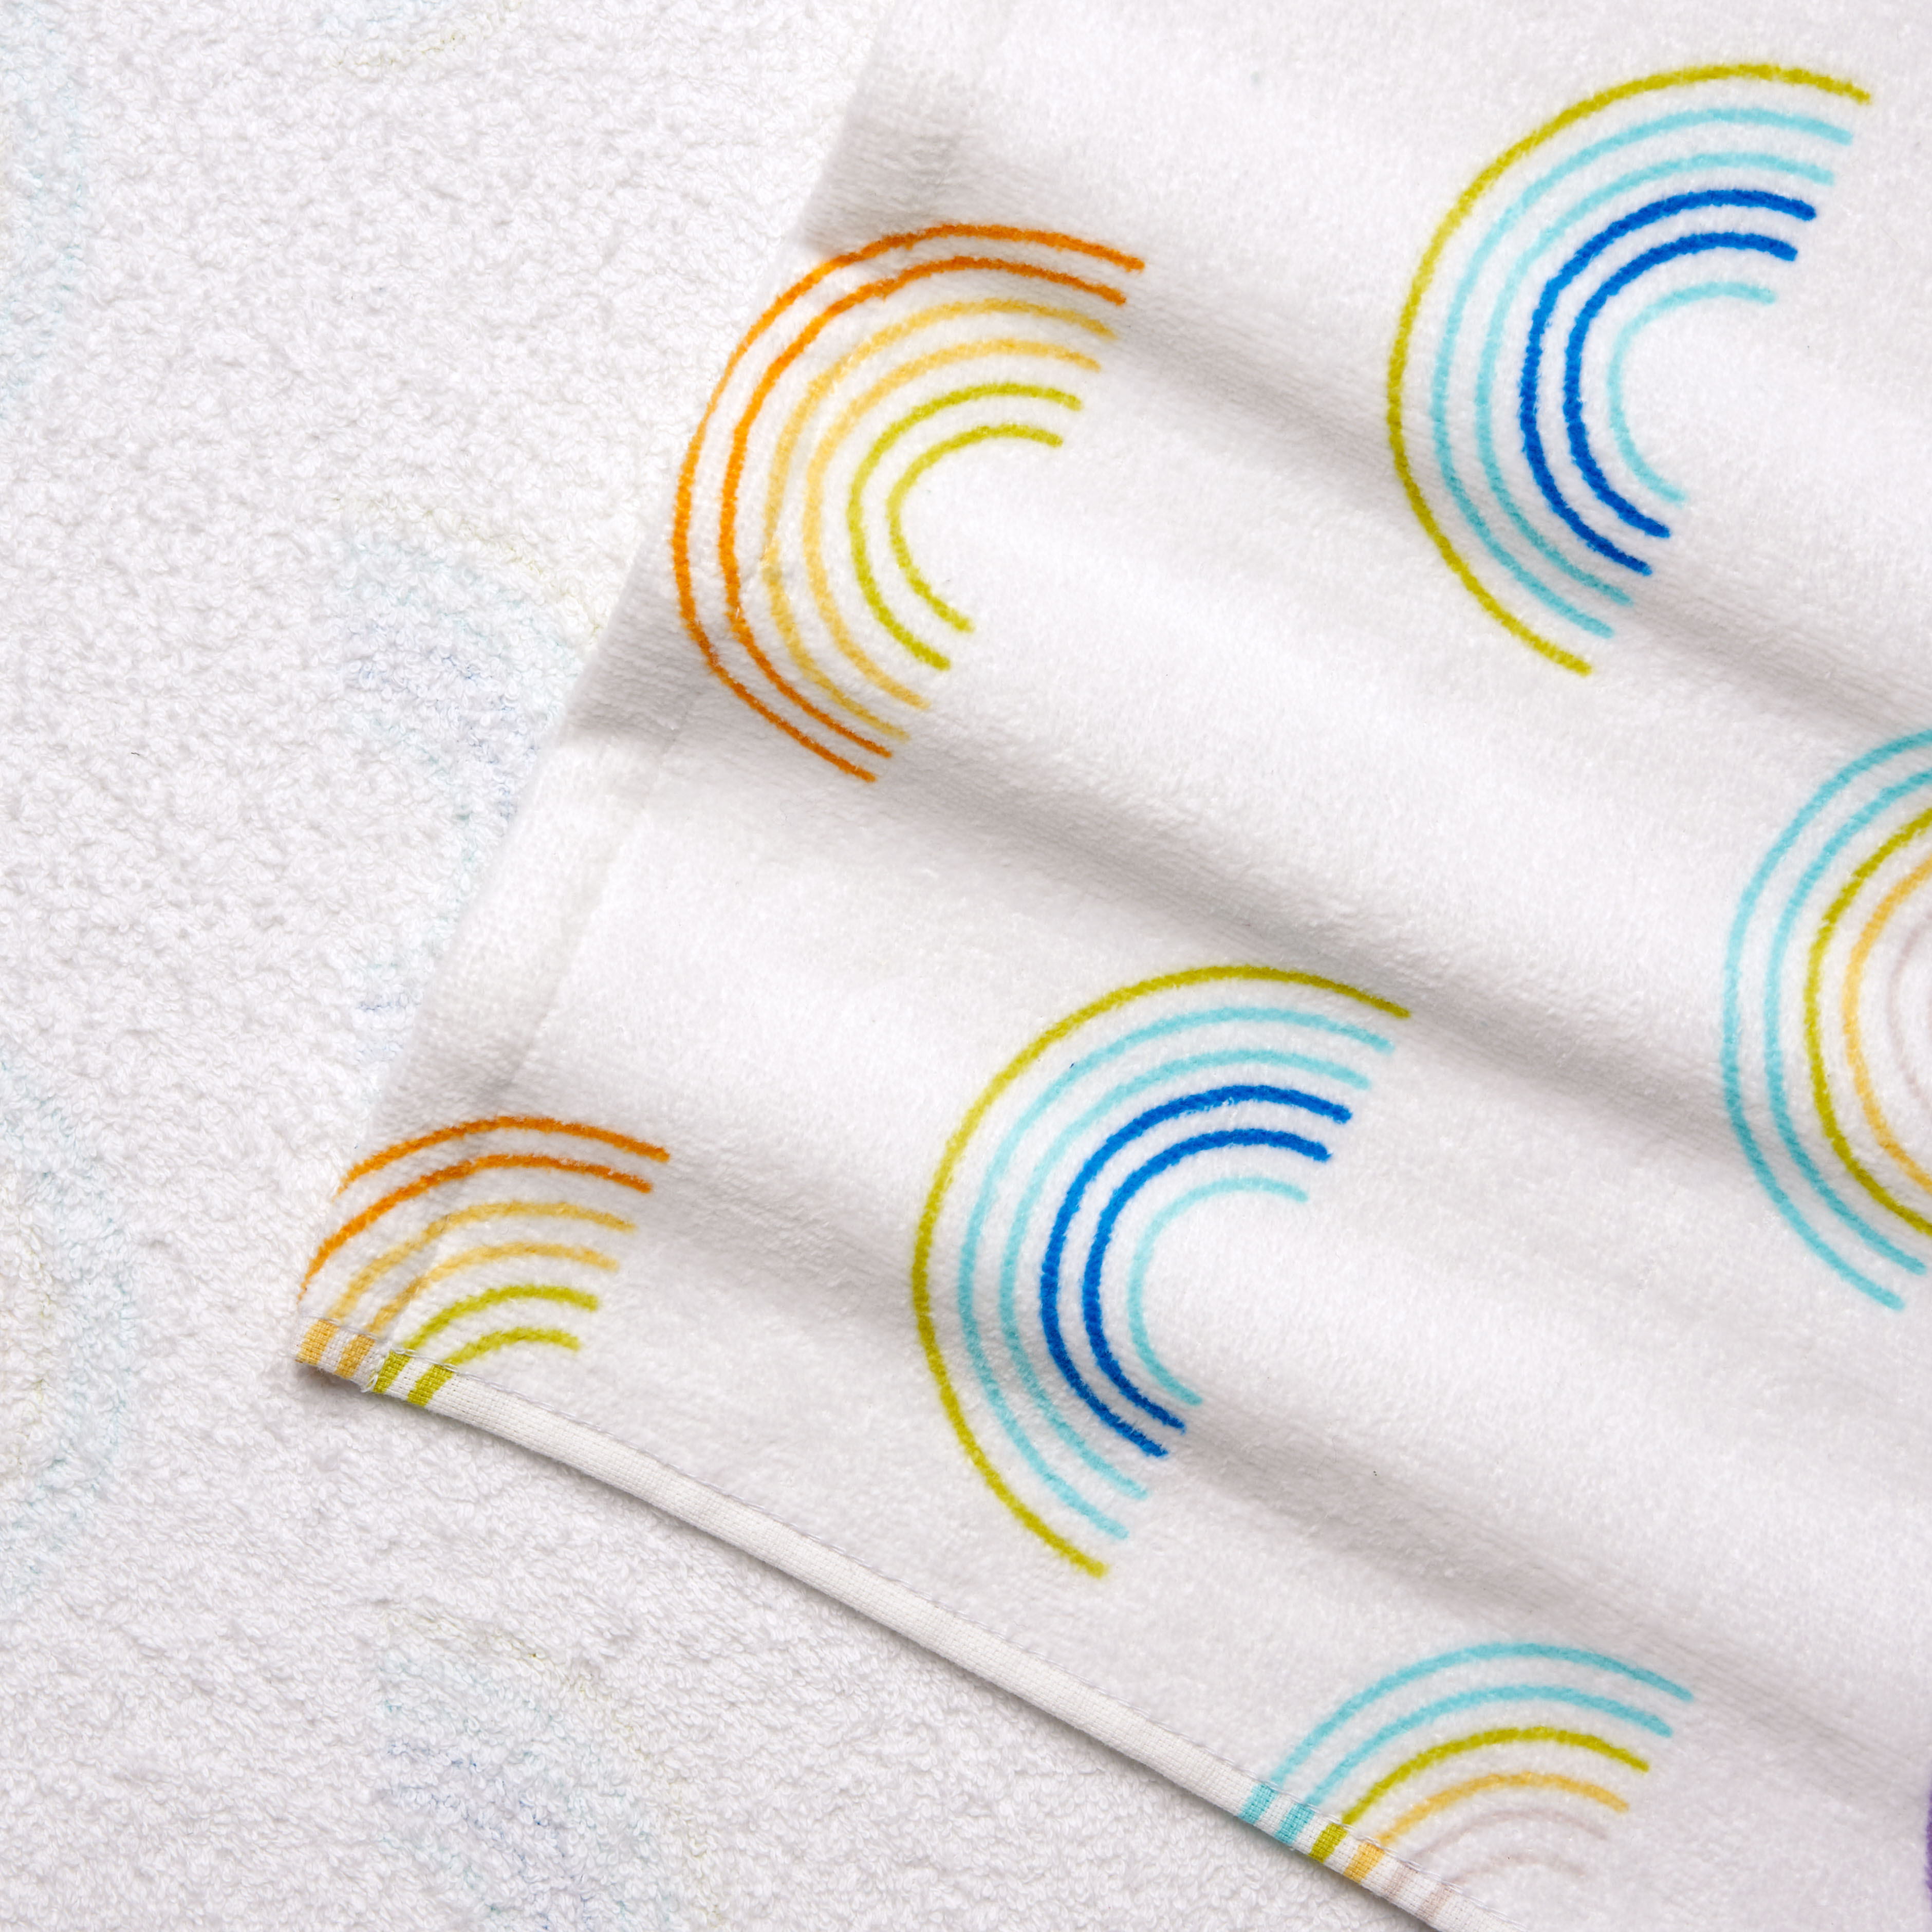 Gap Home Kids Rainbow Toss Organic Cotton 6 Piece Towel Set, White - image 2 of 5